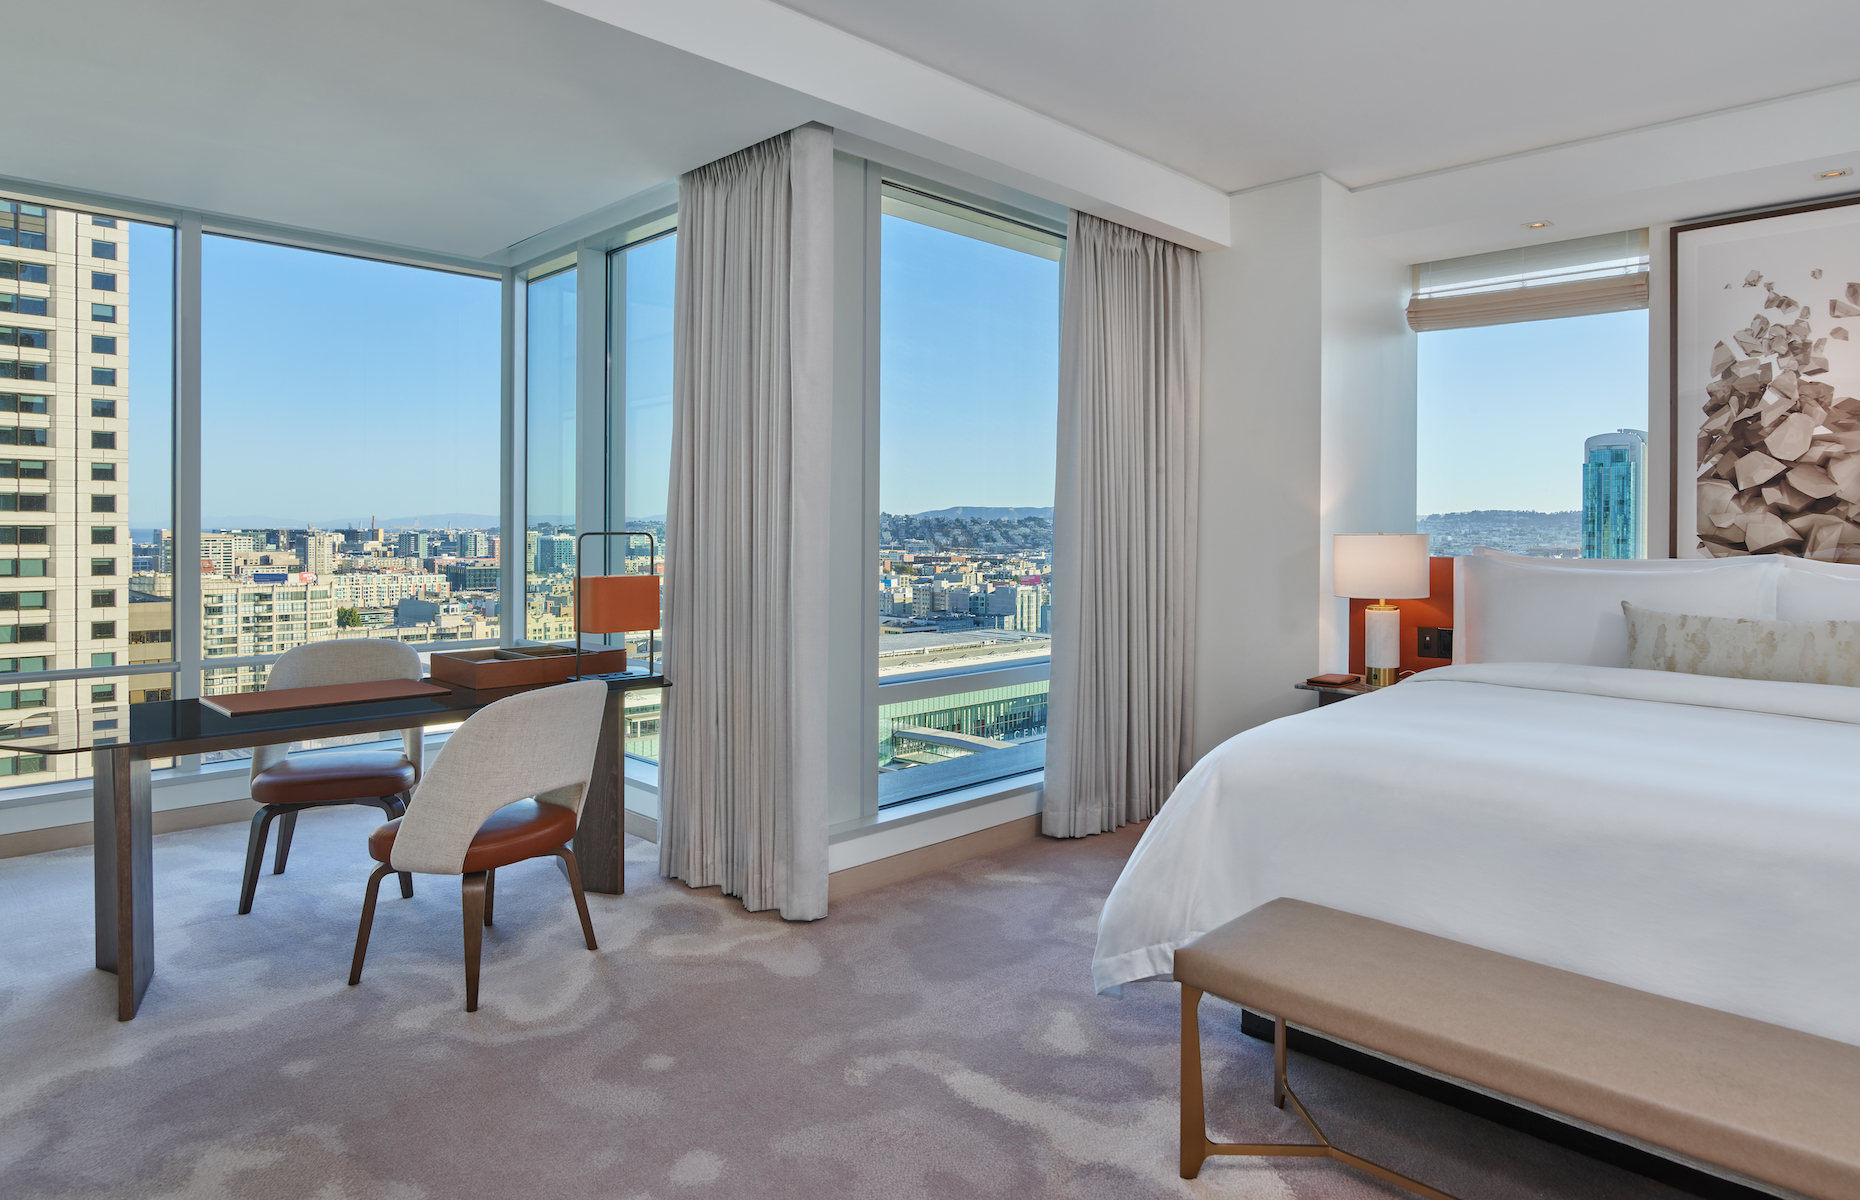 Bedroom in St Regis hotel San Francisco (Image: St Regis)